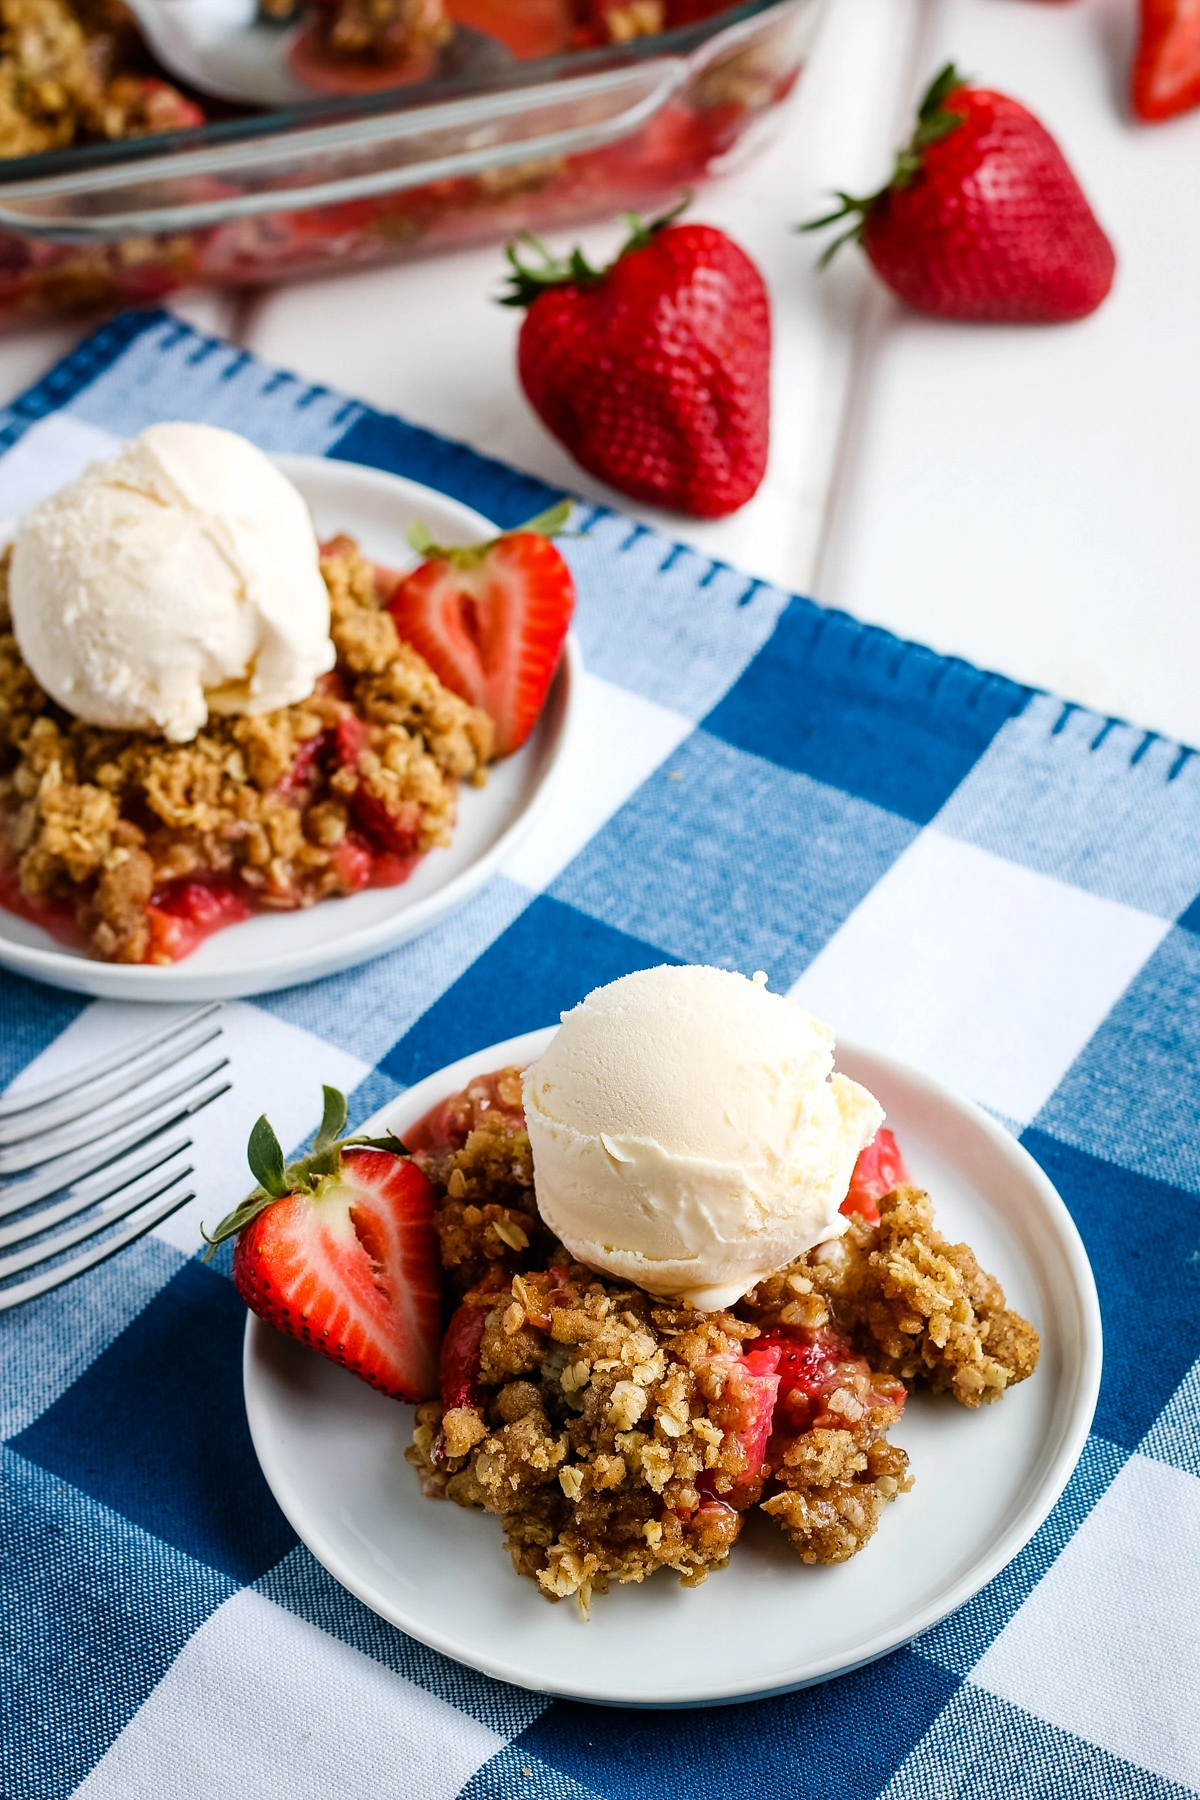 gluten-free rhubarb strawberry crisp topped with vanilla ice cream on gray plates